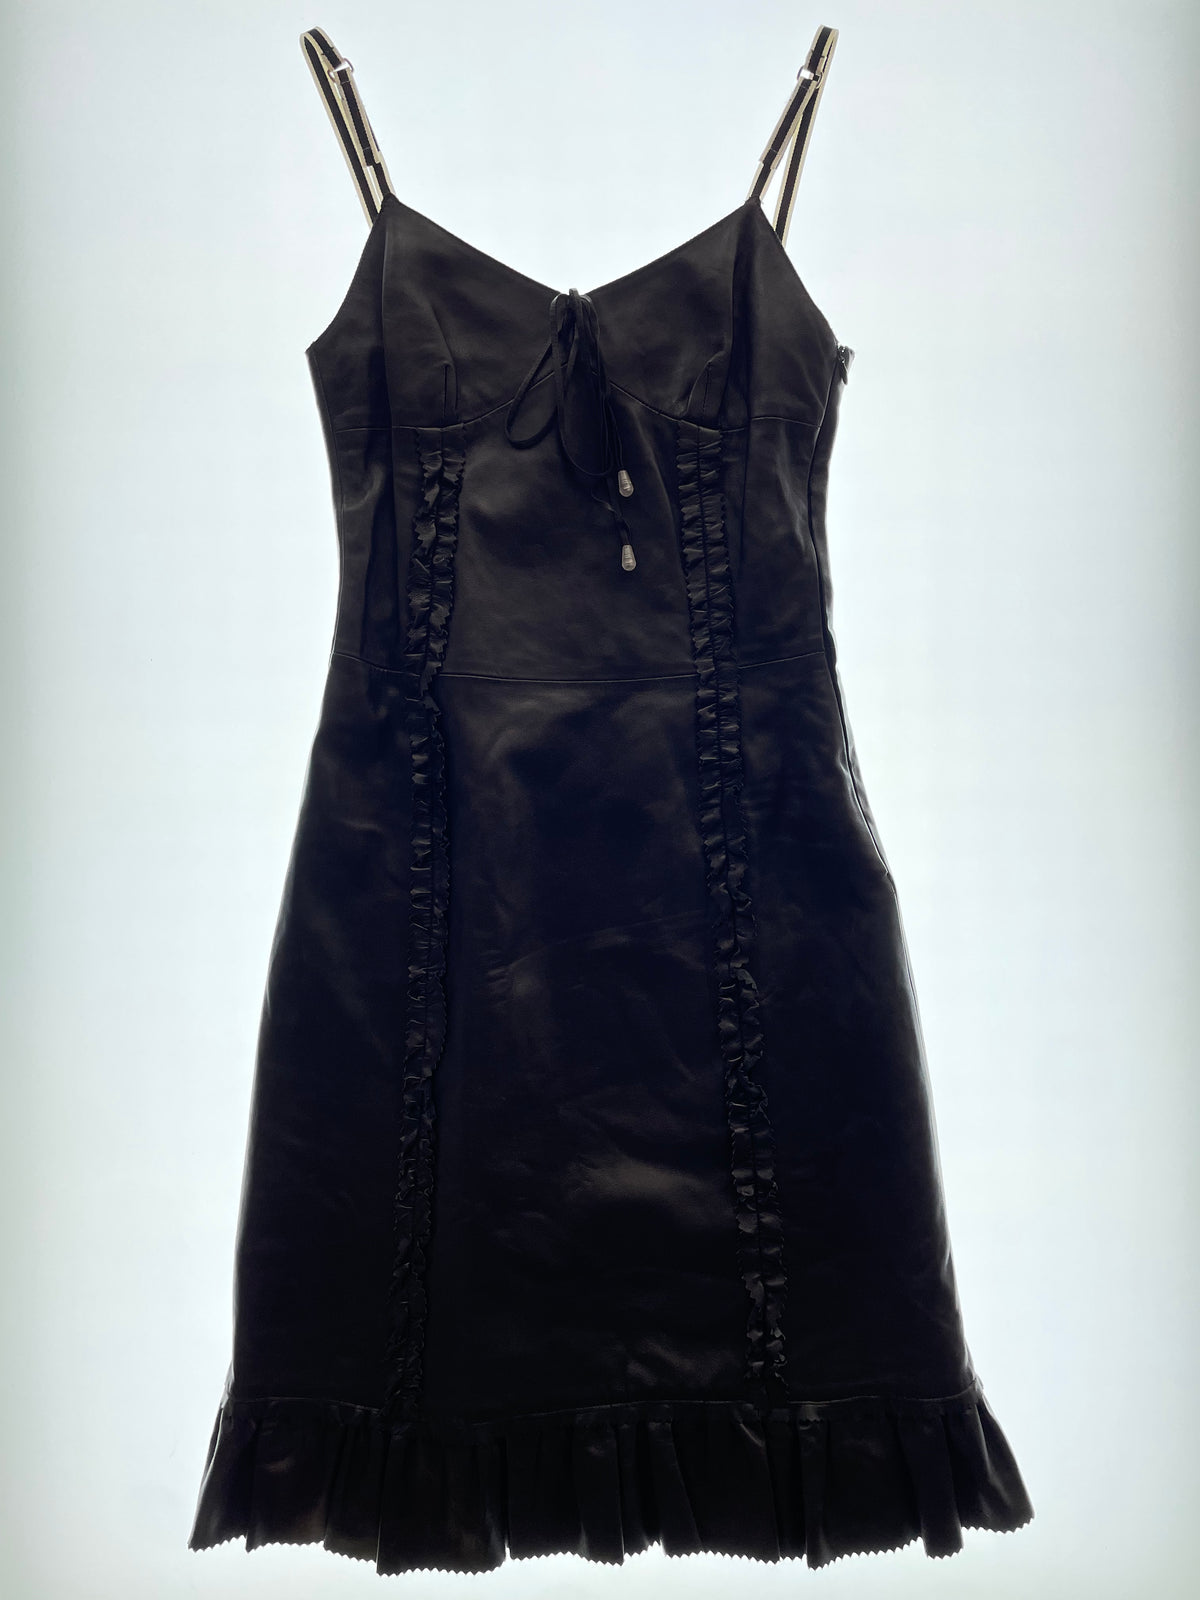 FW 99 Black Leather Dress